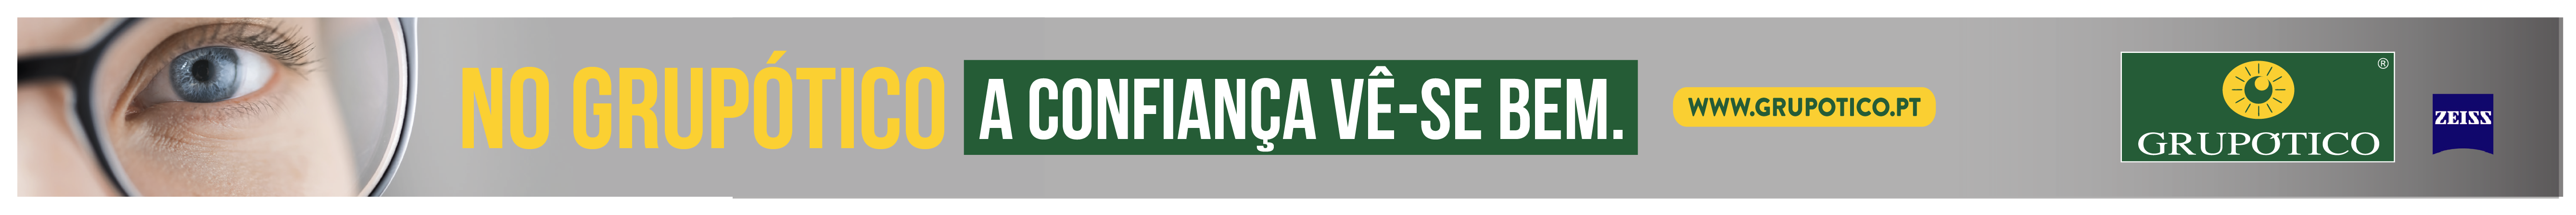 Banner Publicitário